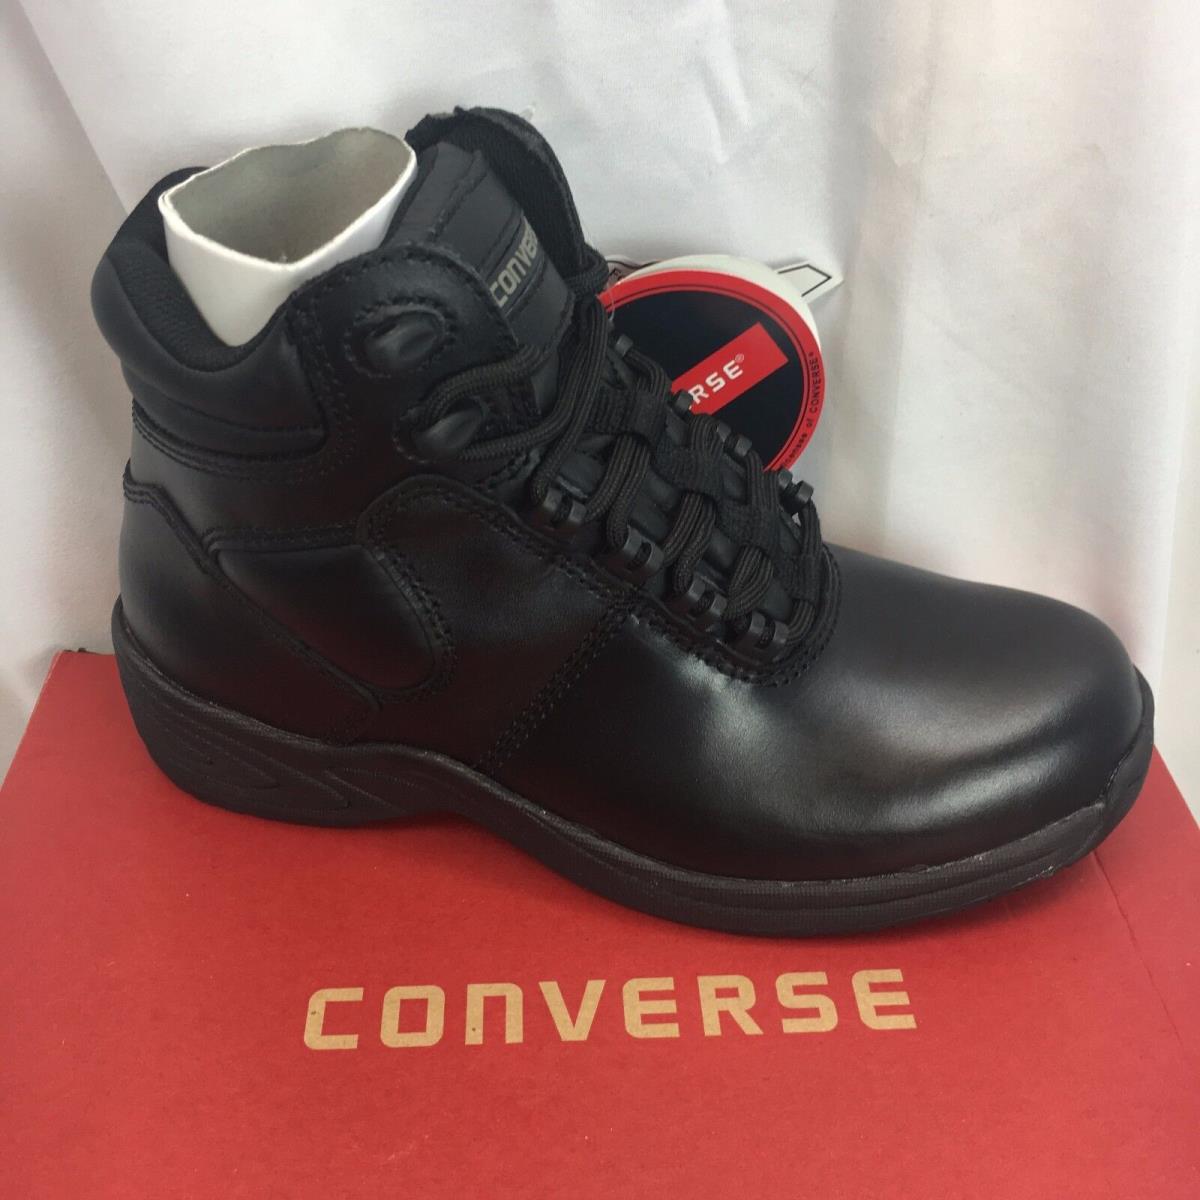 Converse Hi-top C124 6 Black Pin Toe Chukka Athletic Black Leather Work Shoes